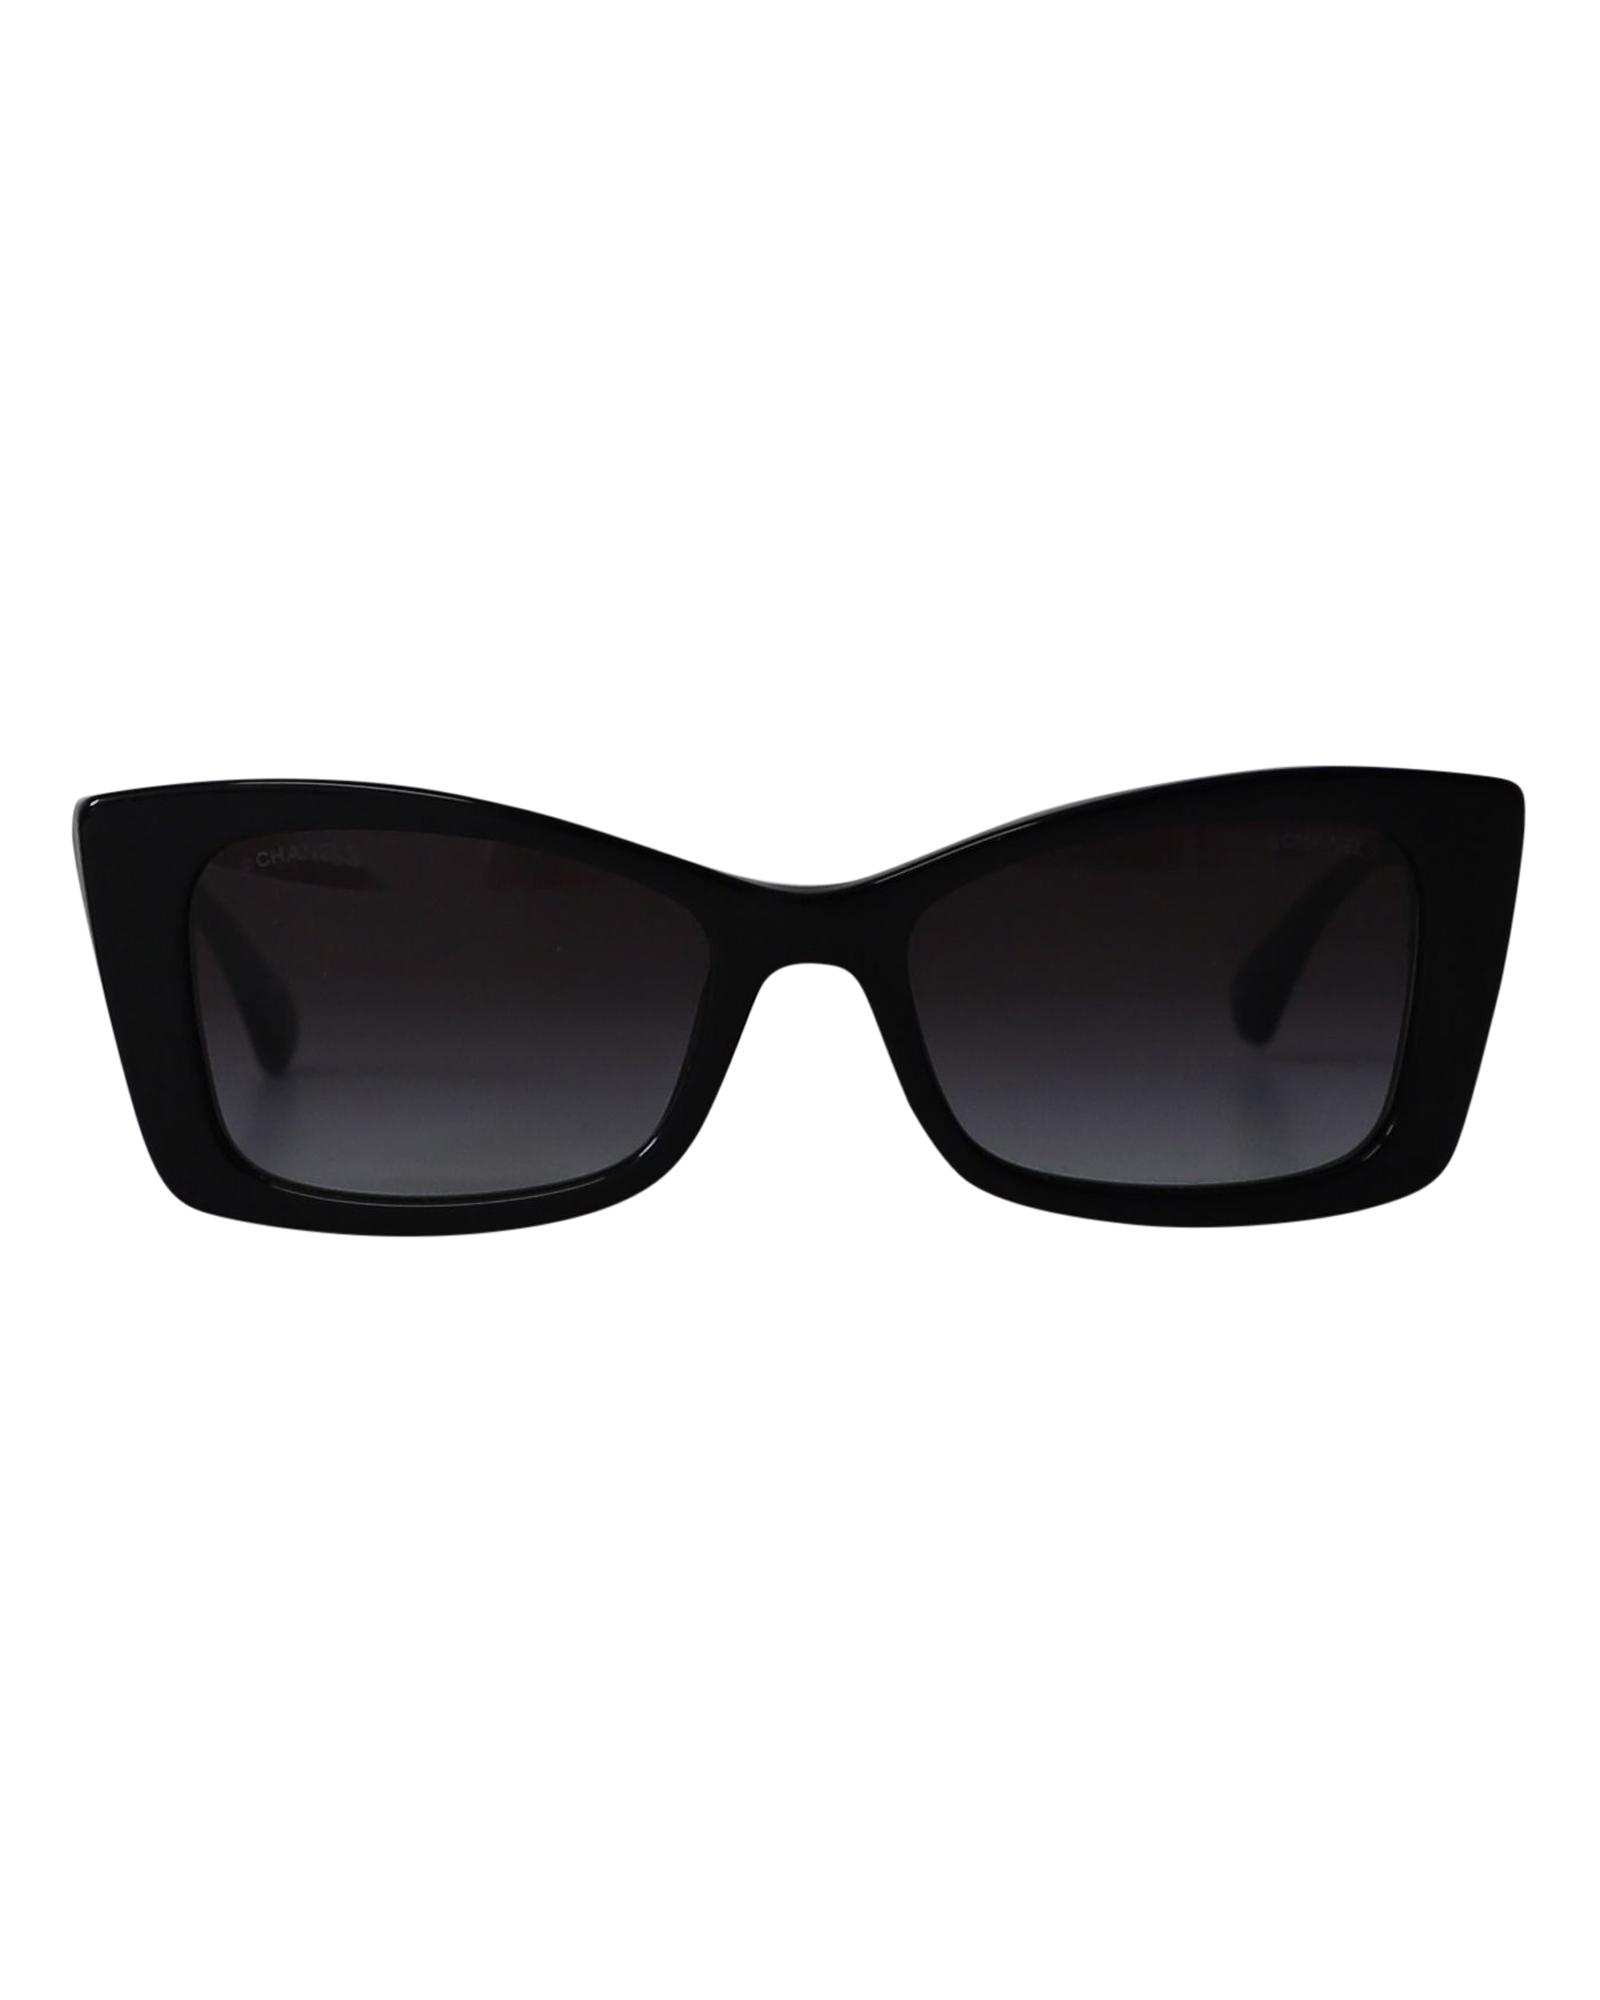 Chanel 5430 Gradient Black Rectangular Sunglasses | Hardly Ever Worn It